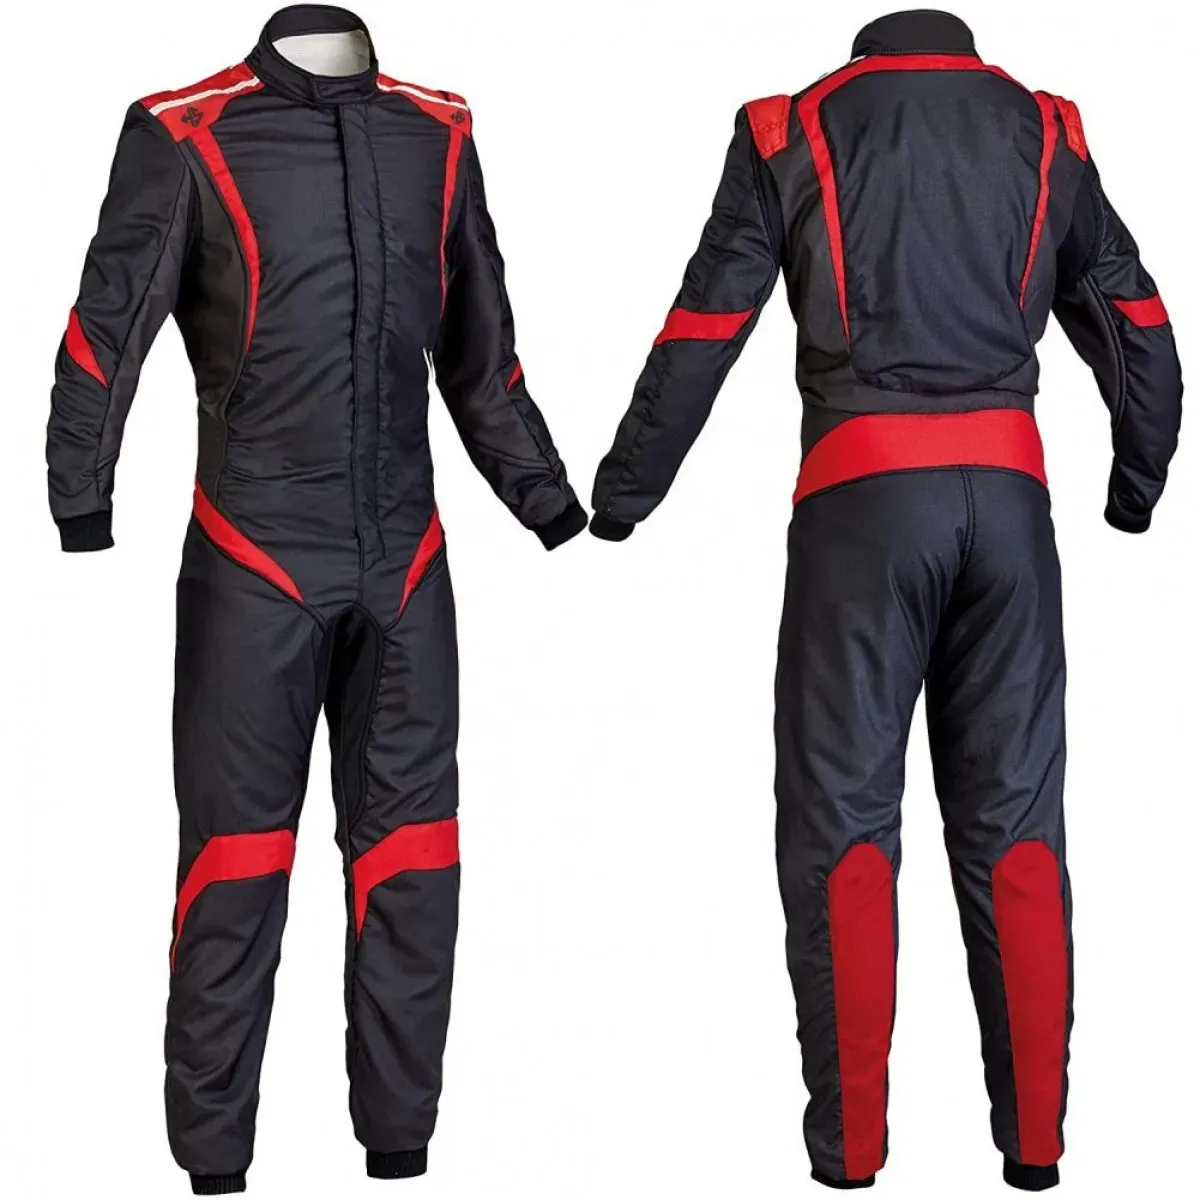 उच्च गुणवत्ता वाले कस्टम मेड रेसिंग मोटरबाइक सूट कस्टम / केवलर मोटरसाइकिल रेसिंग सूट